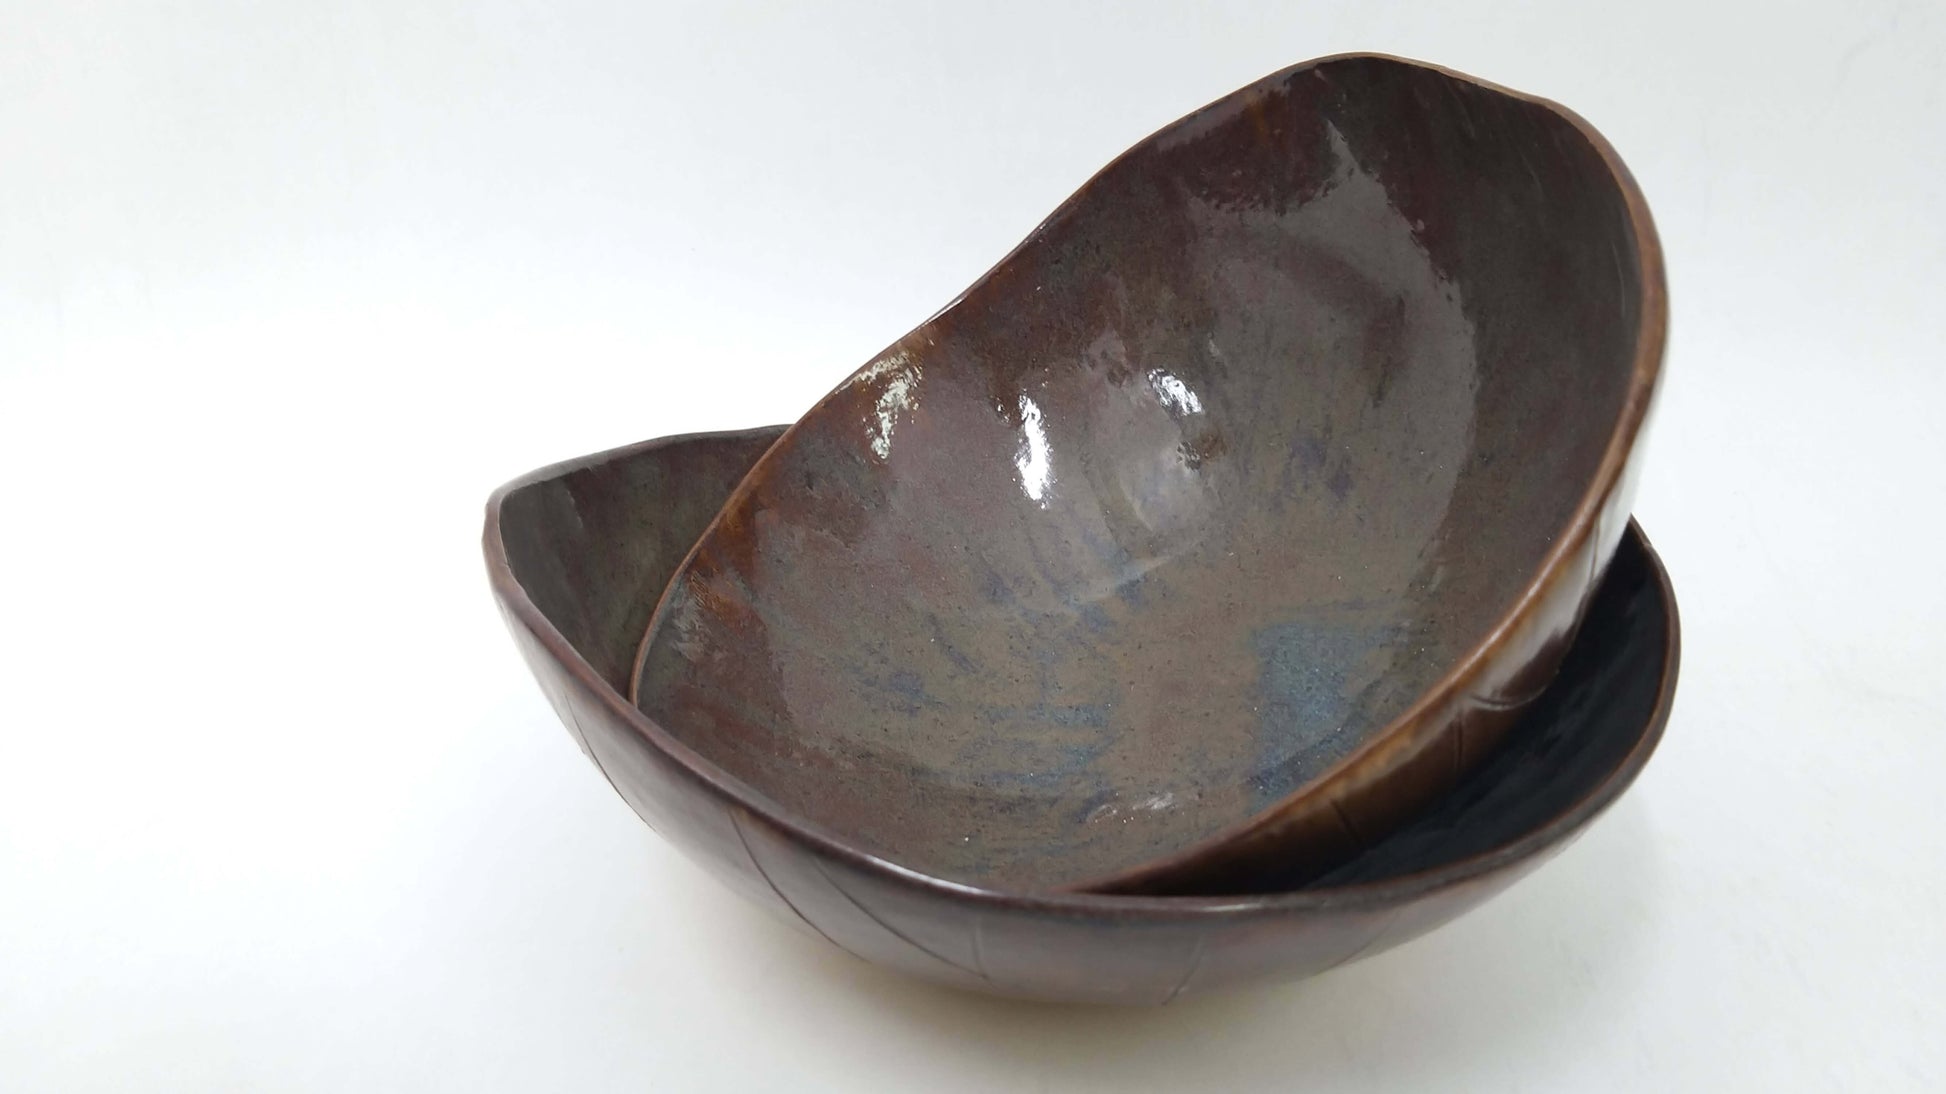 Two brown ceramic bowls